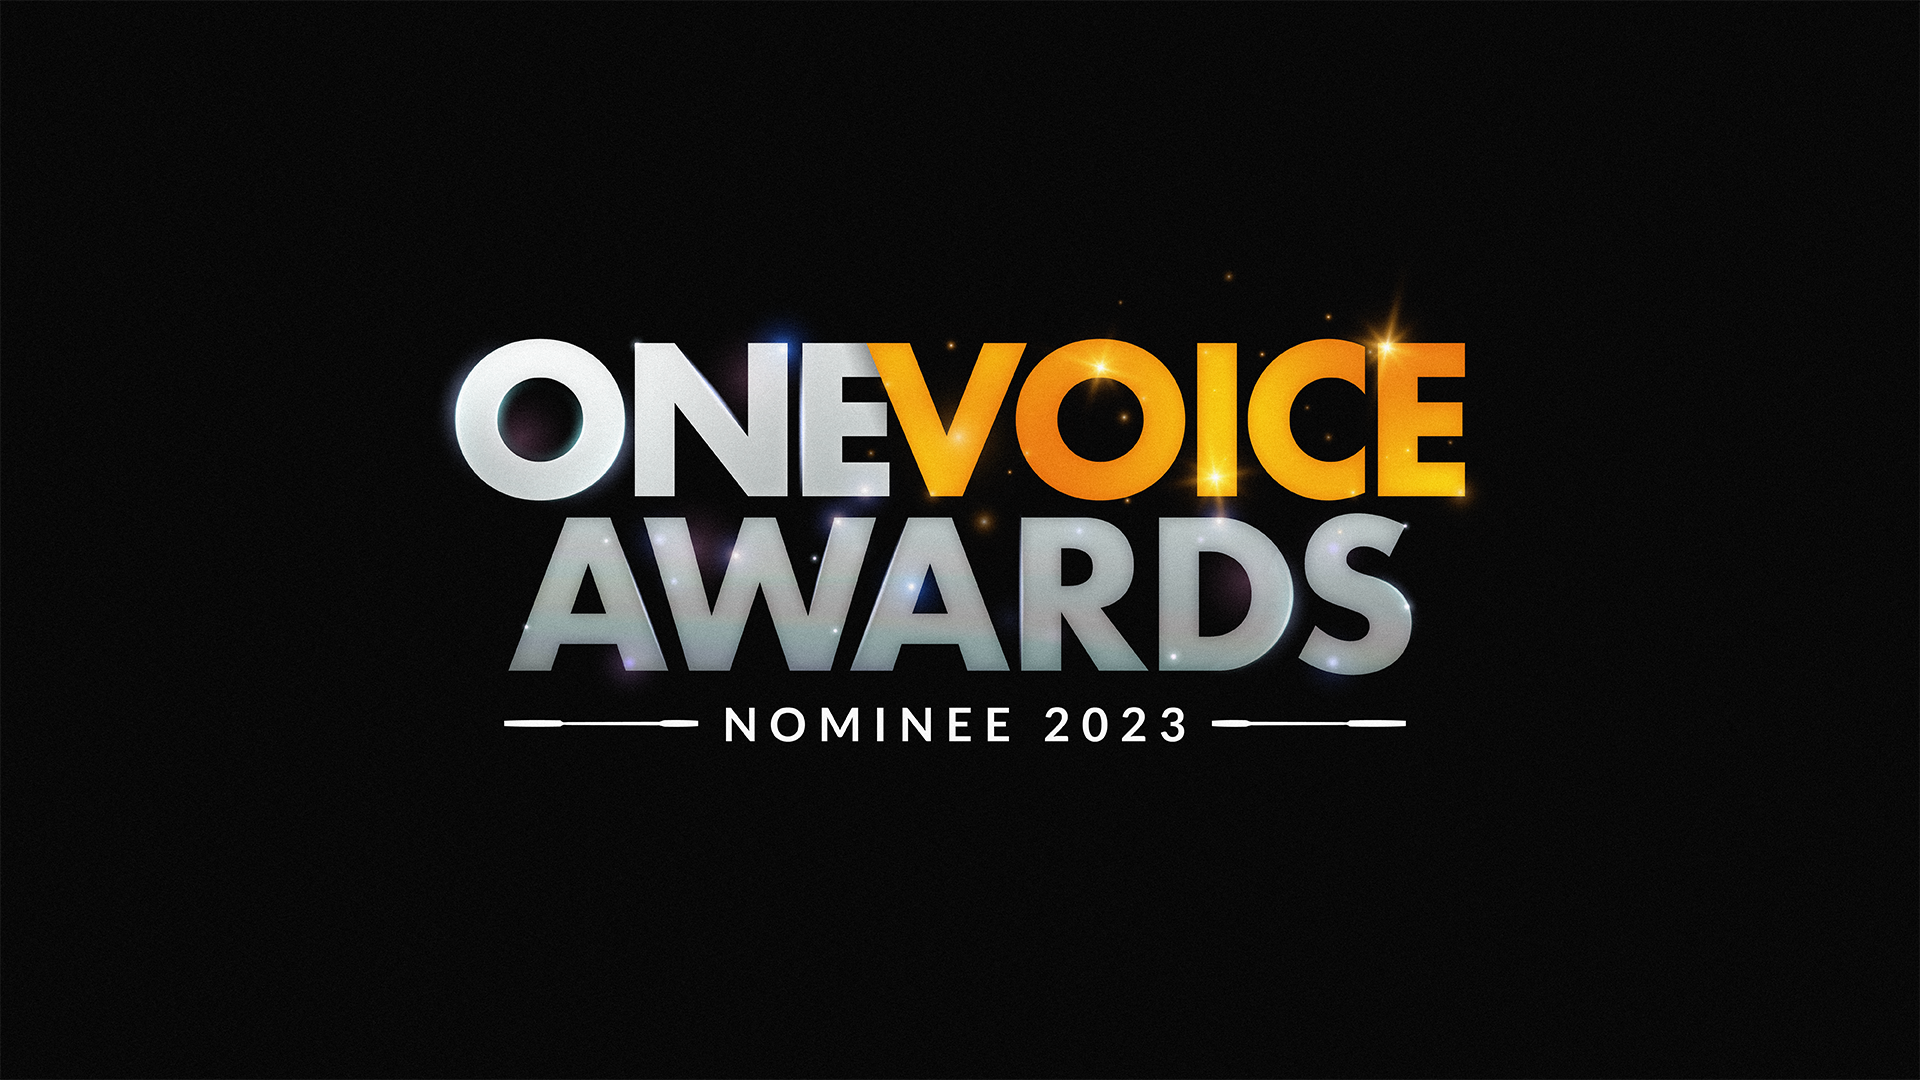 One Voice Awards